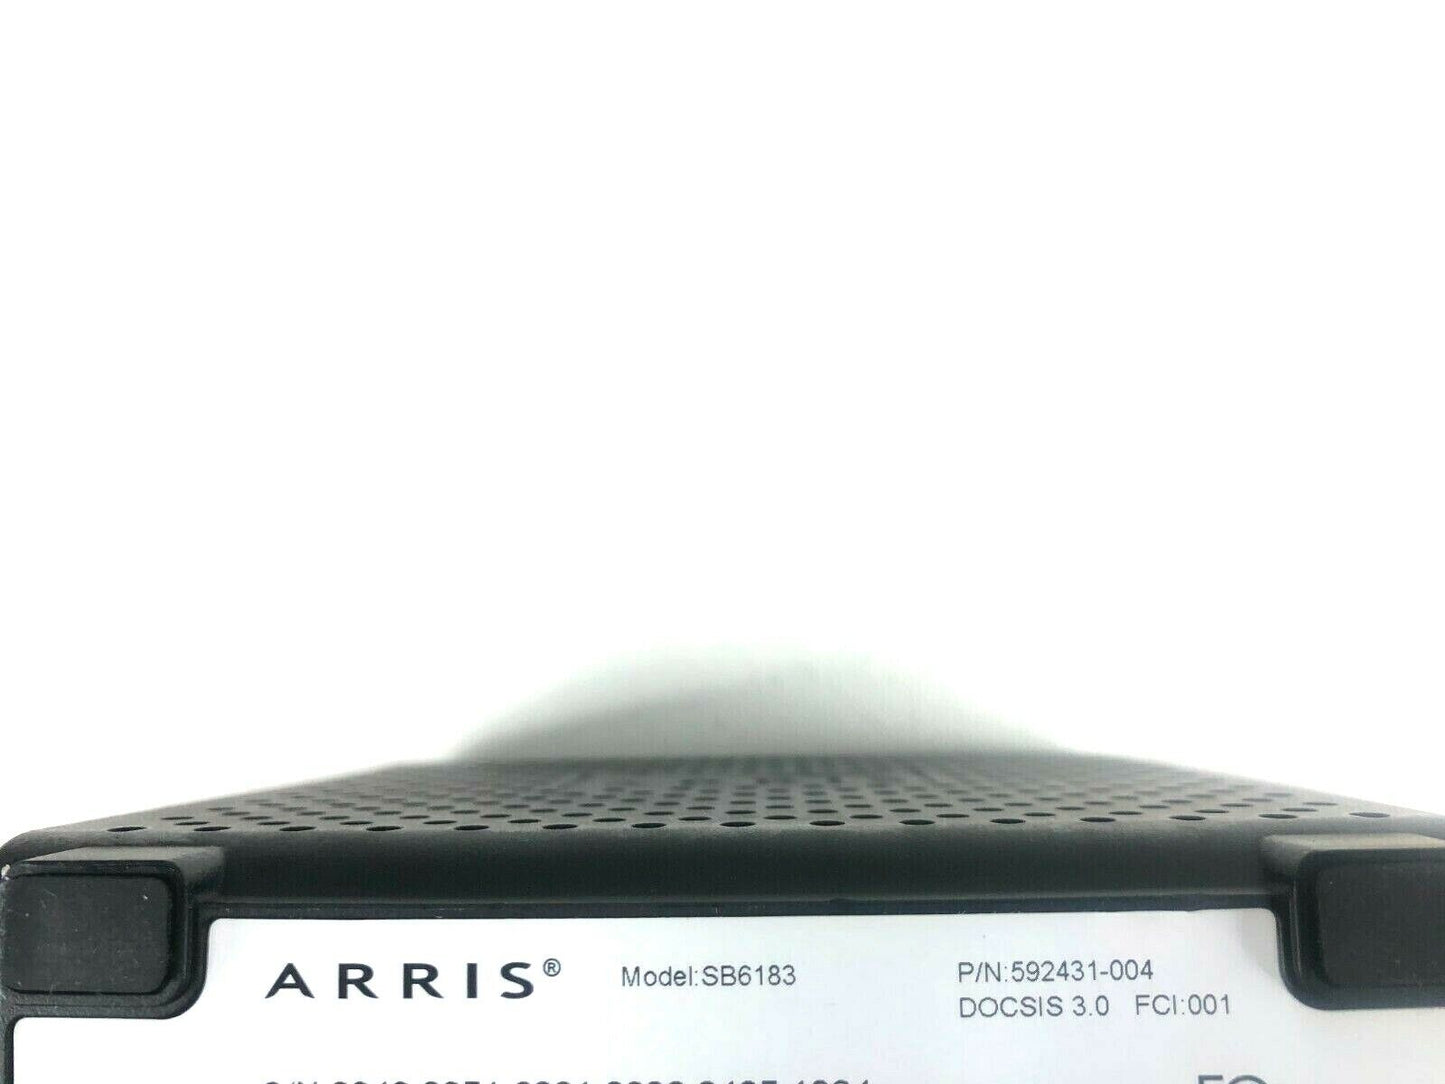 Lot of 8 ARRIS SB6183 Surfboard 16x4 DOCSIS 3.0 Cable Modem - Black For Parts